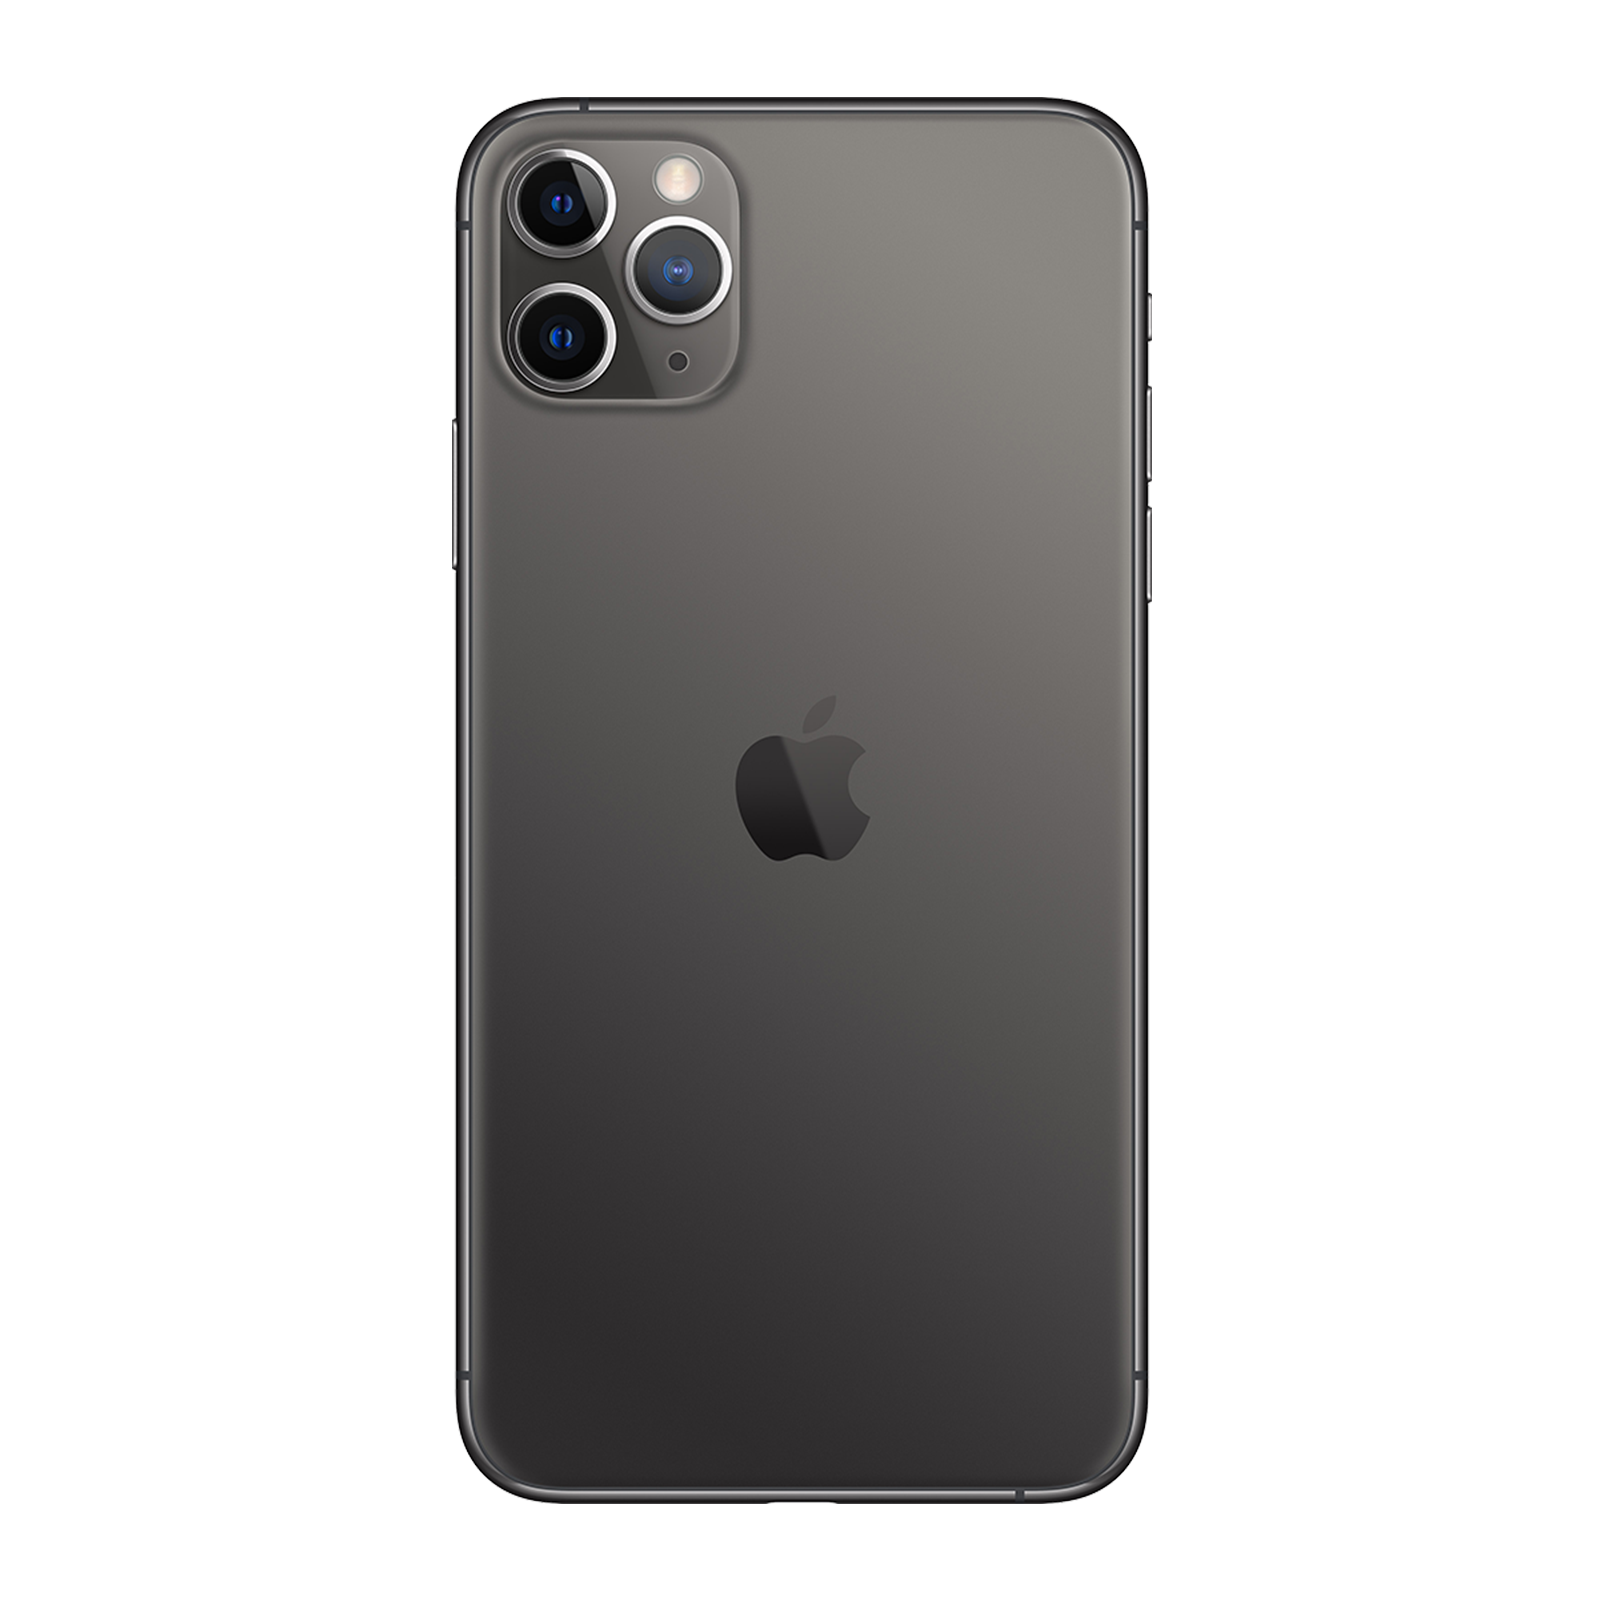 Apple iPhone 11 Pro 256GB Space Grey Very Good - Unlocked